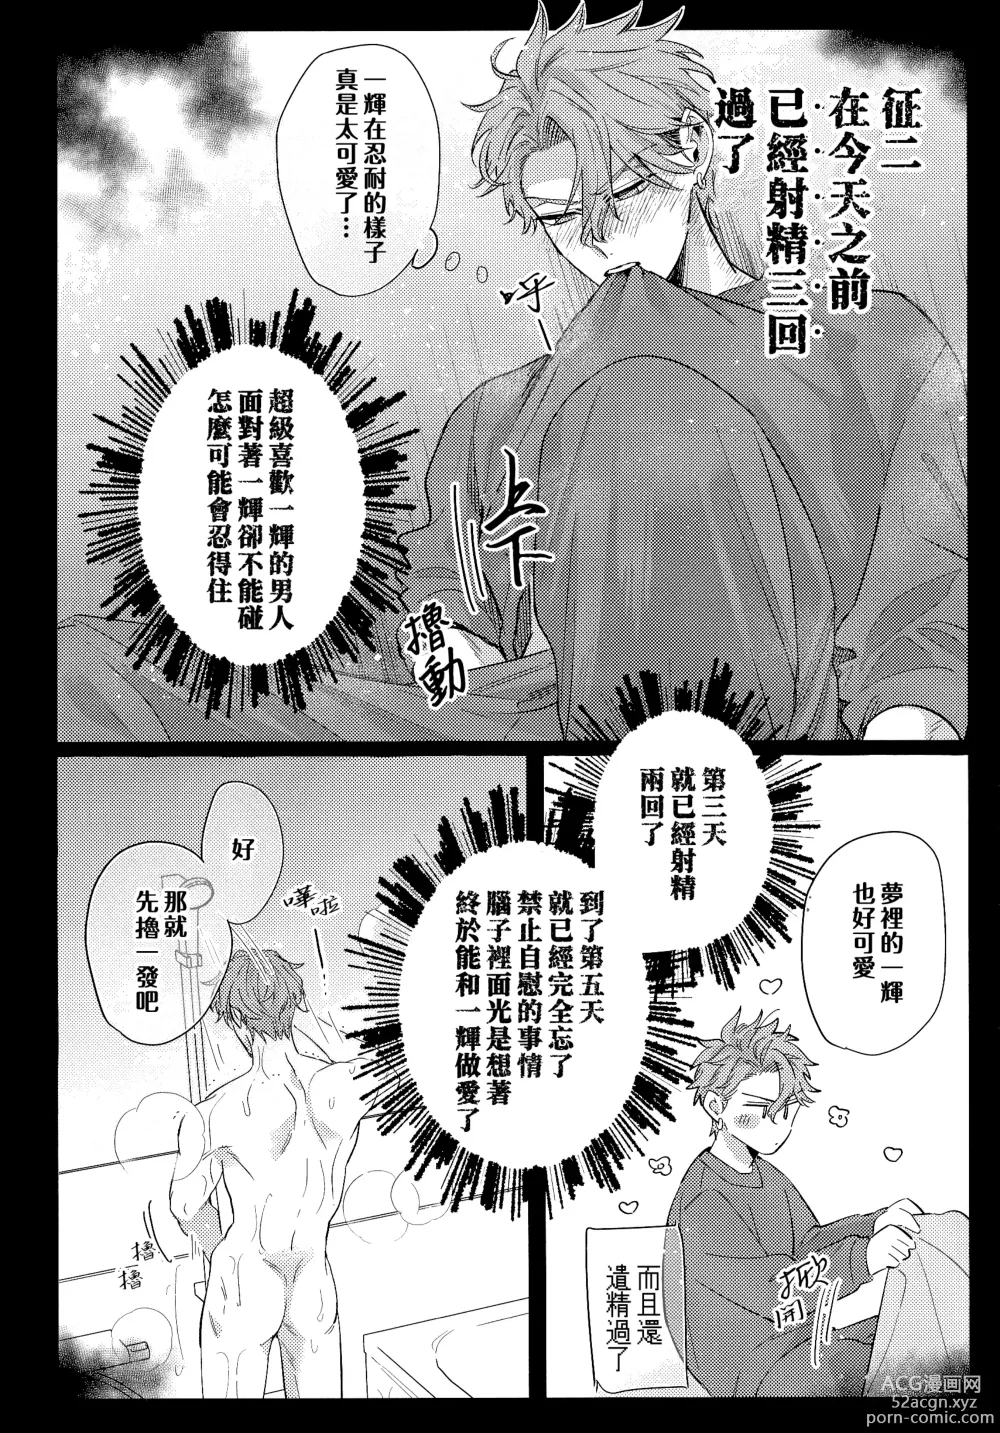 Page 23 of doujinshi skip run!run!run! (uncensored)